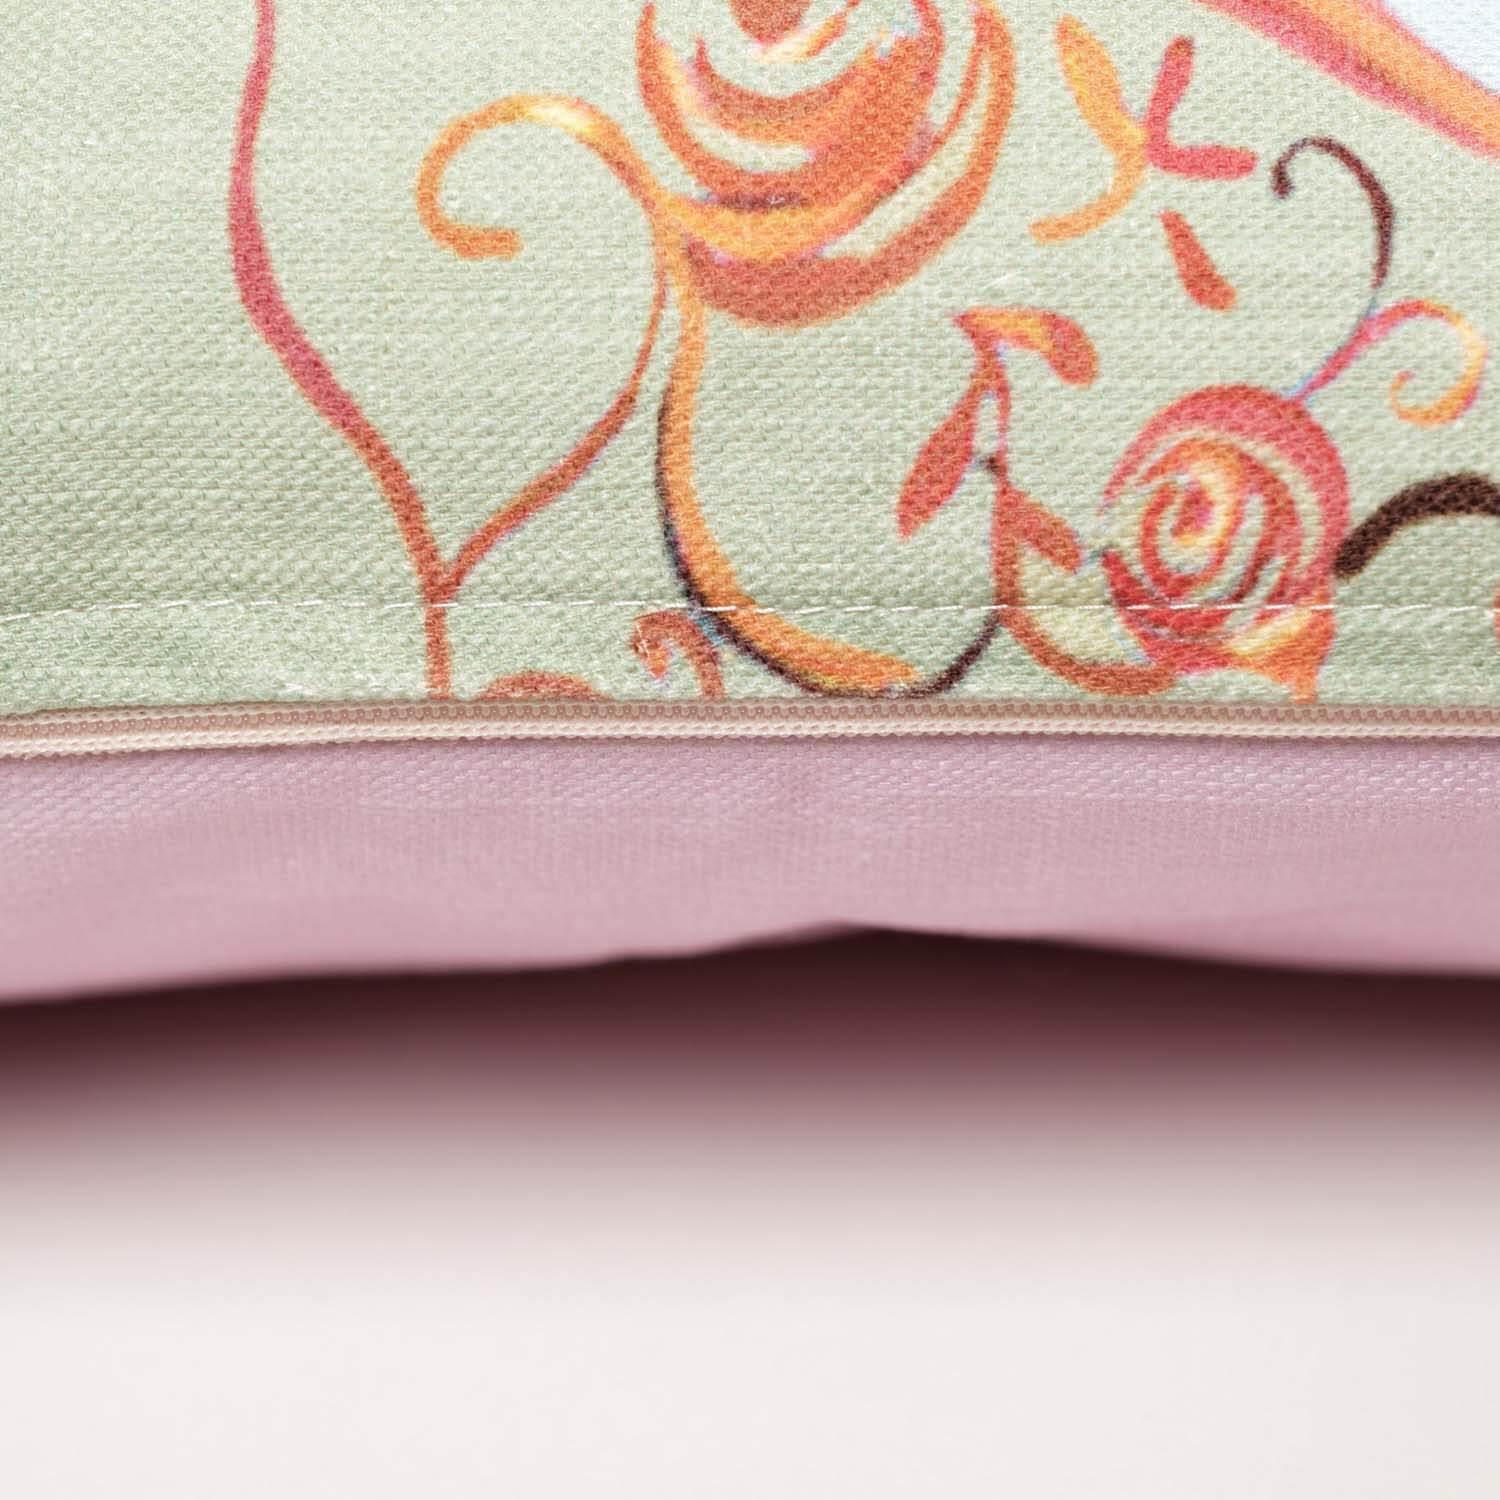 Magnolia & Roses - Funky Art Cushion - Garden Of Eden - House Of Turnowsky Pillows - Handmade Cushions UK - WeLoveCushions